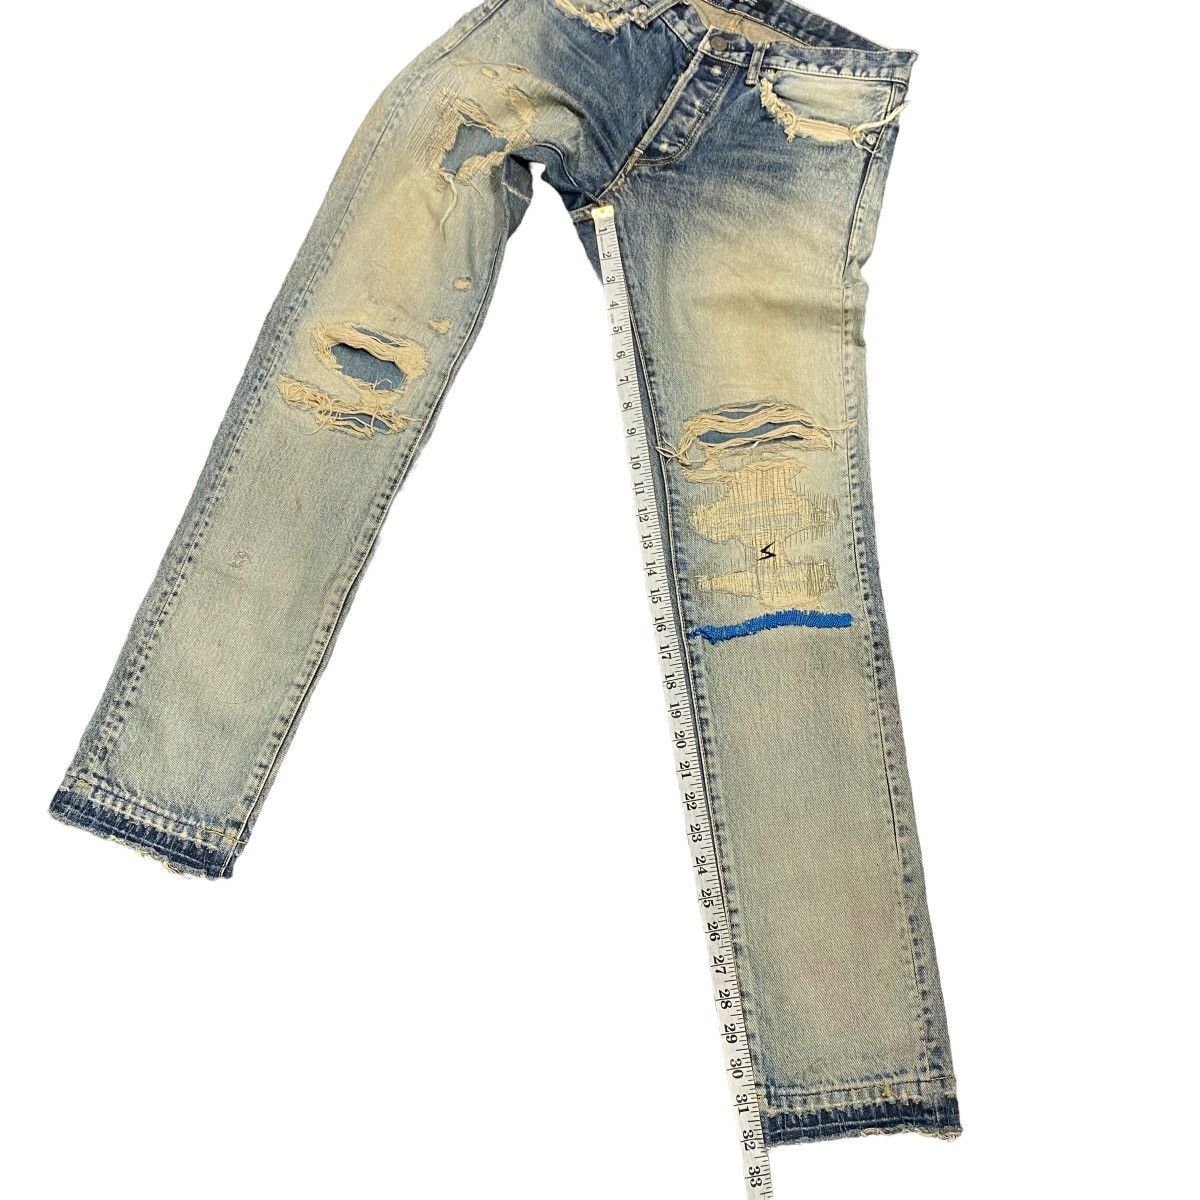 ❗️❗️❗️Rare Item Undercover 68 Blue Yarn Jeans - 25